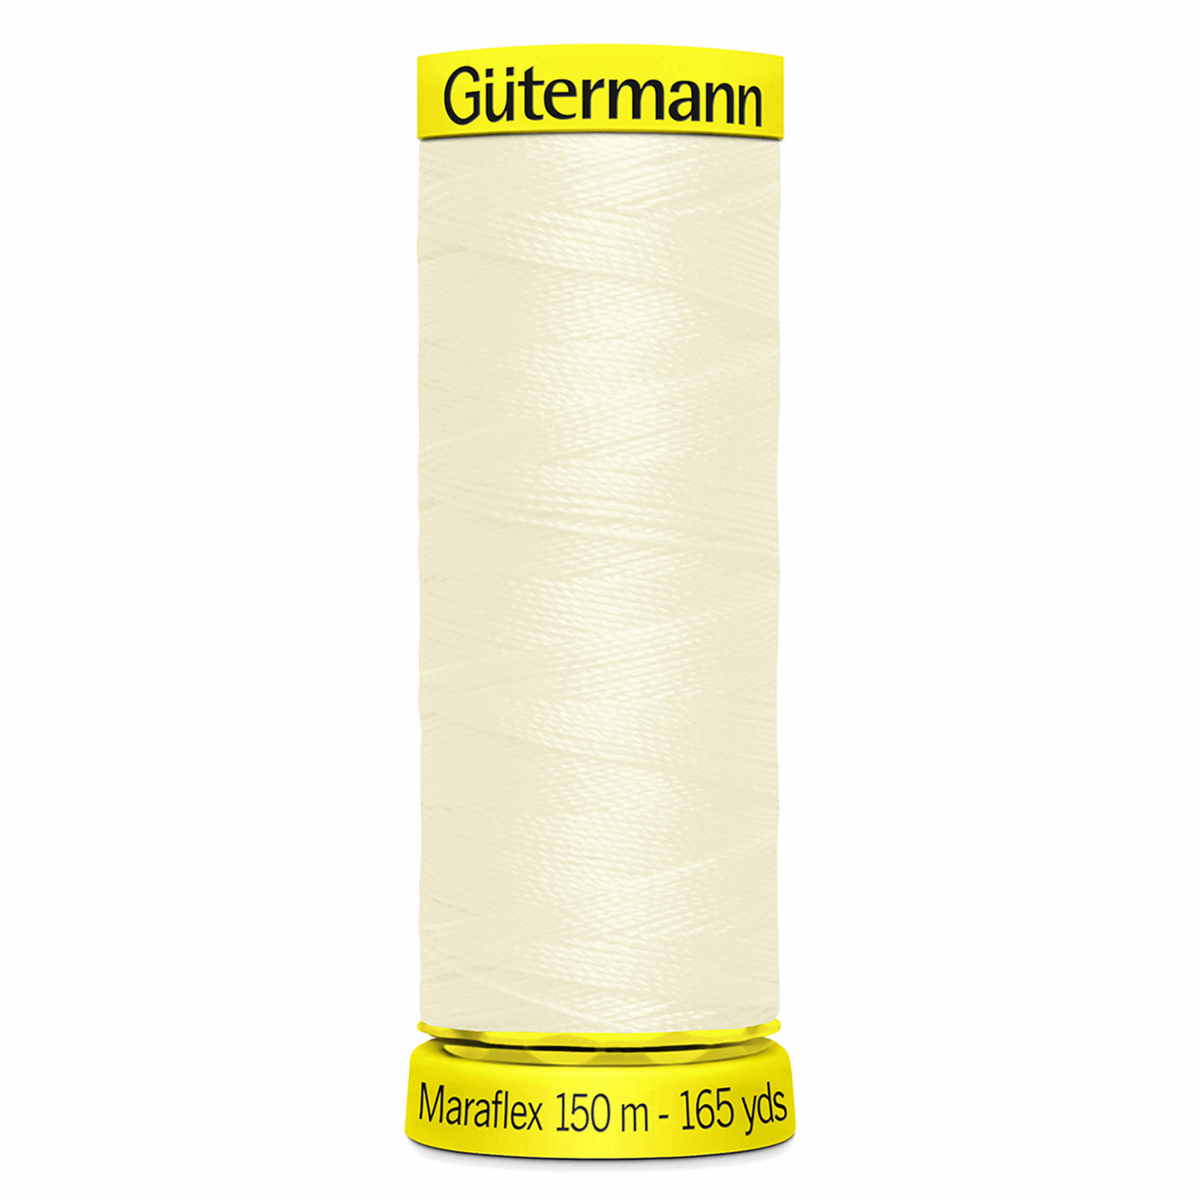 Gutermann Maraflex Elastic Sewing Thread 150m Cream 1